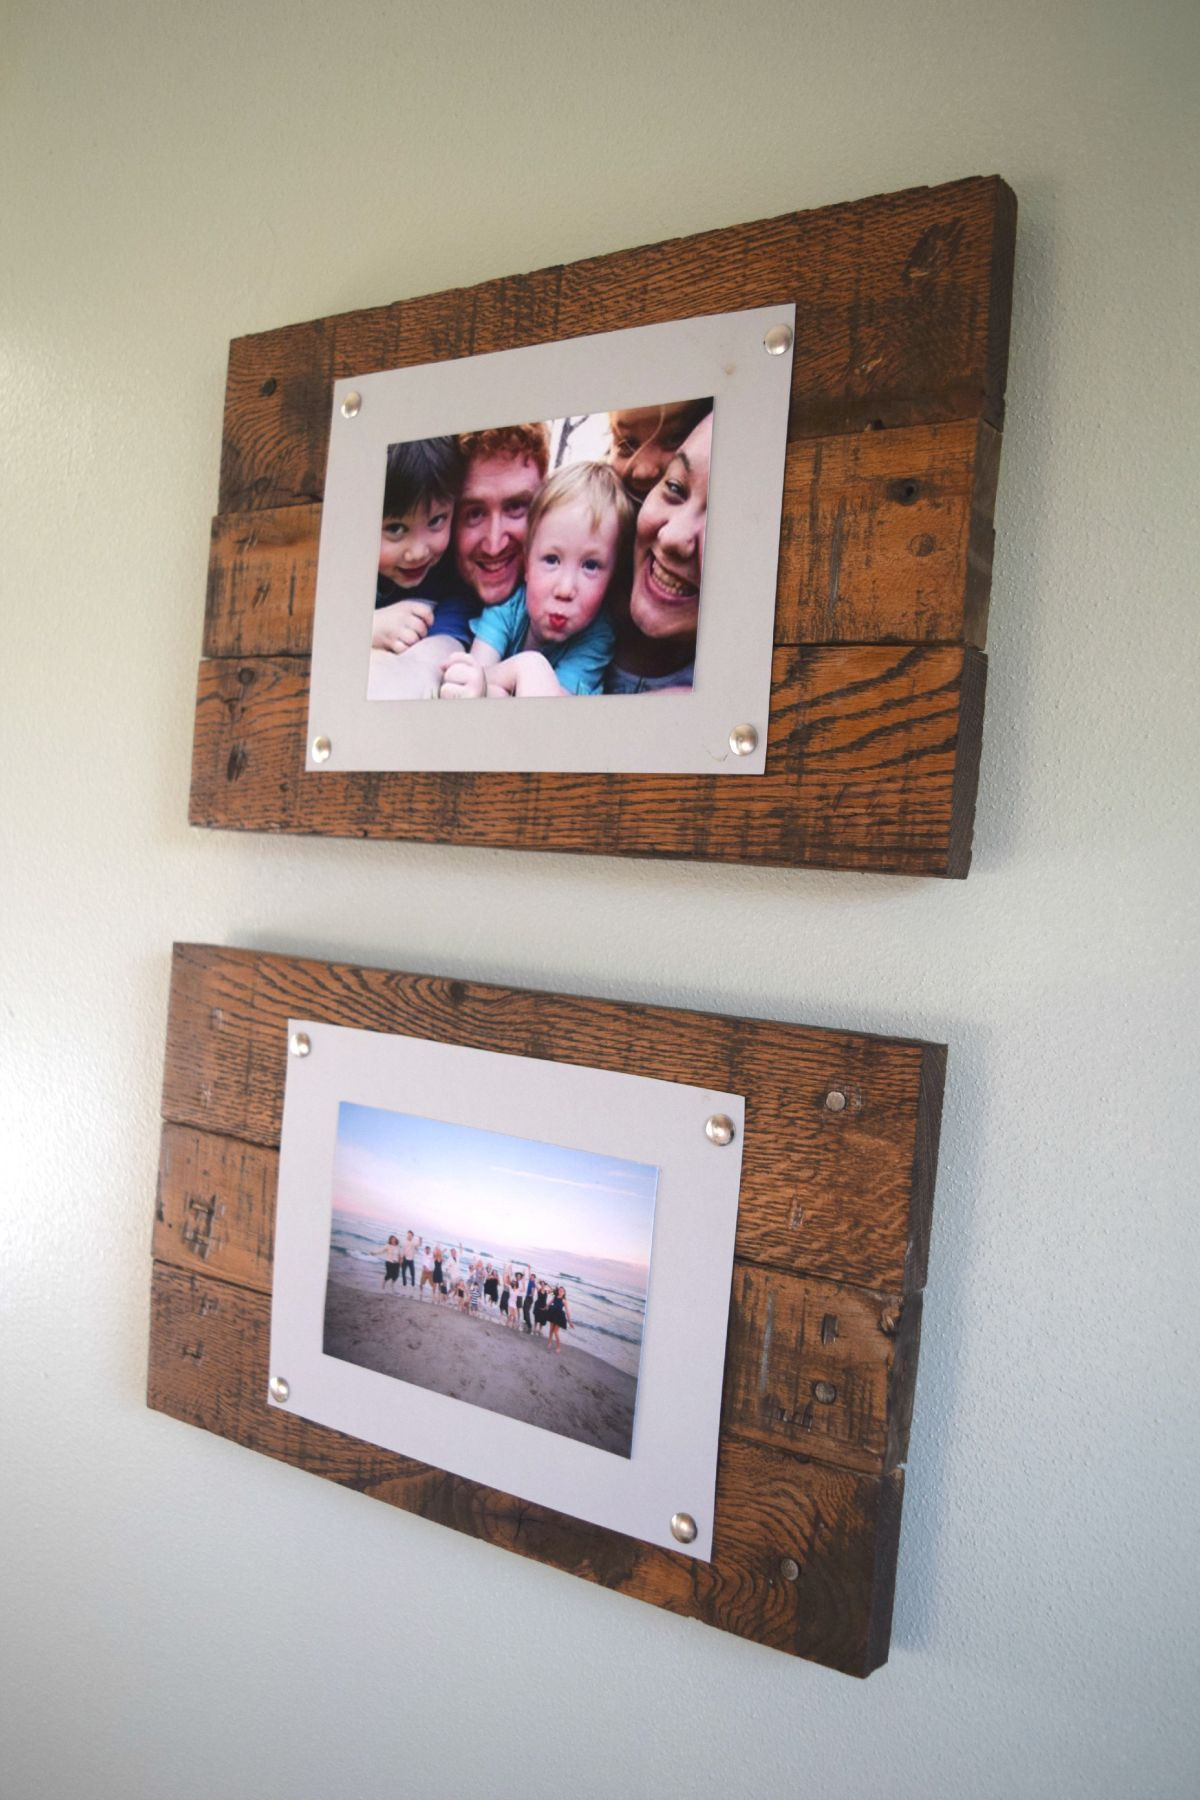 Best ideas about DIY Picture Frame Ideas
. Save or Pin 20 DIY Picture Frame Ideas For Personalized And Original Now.